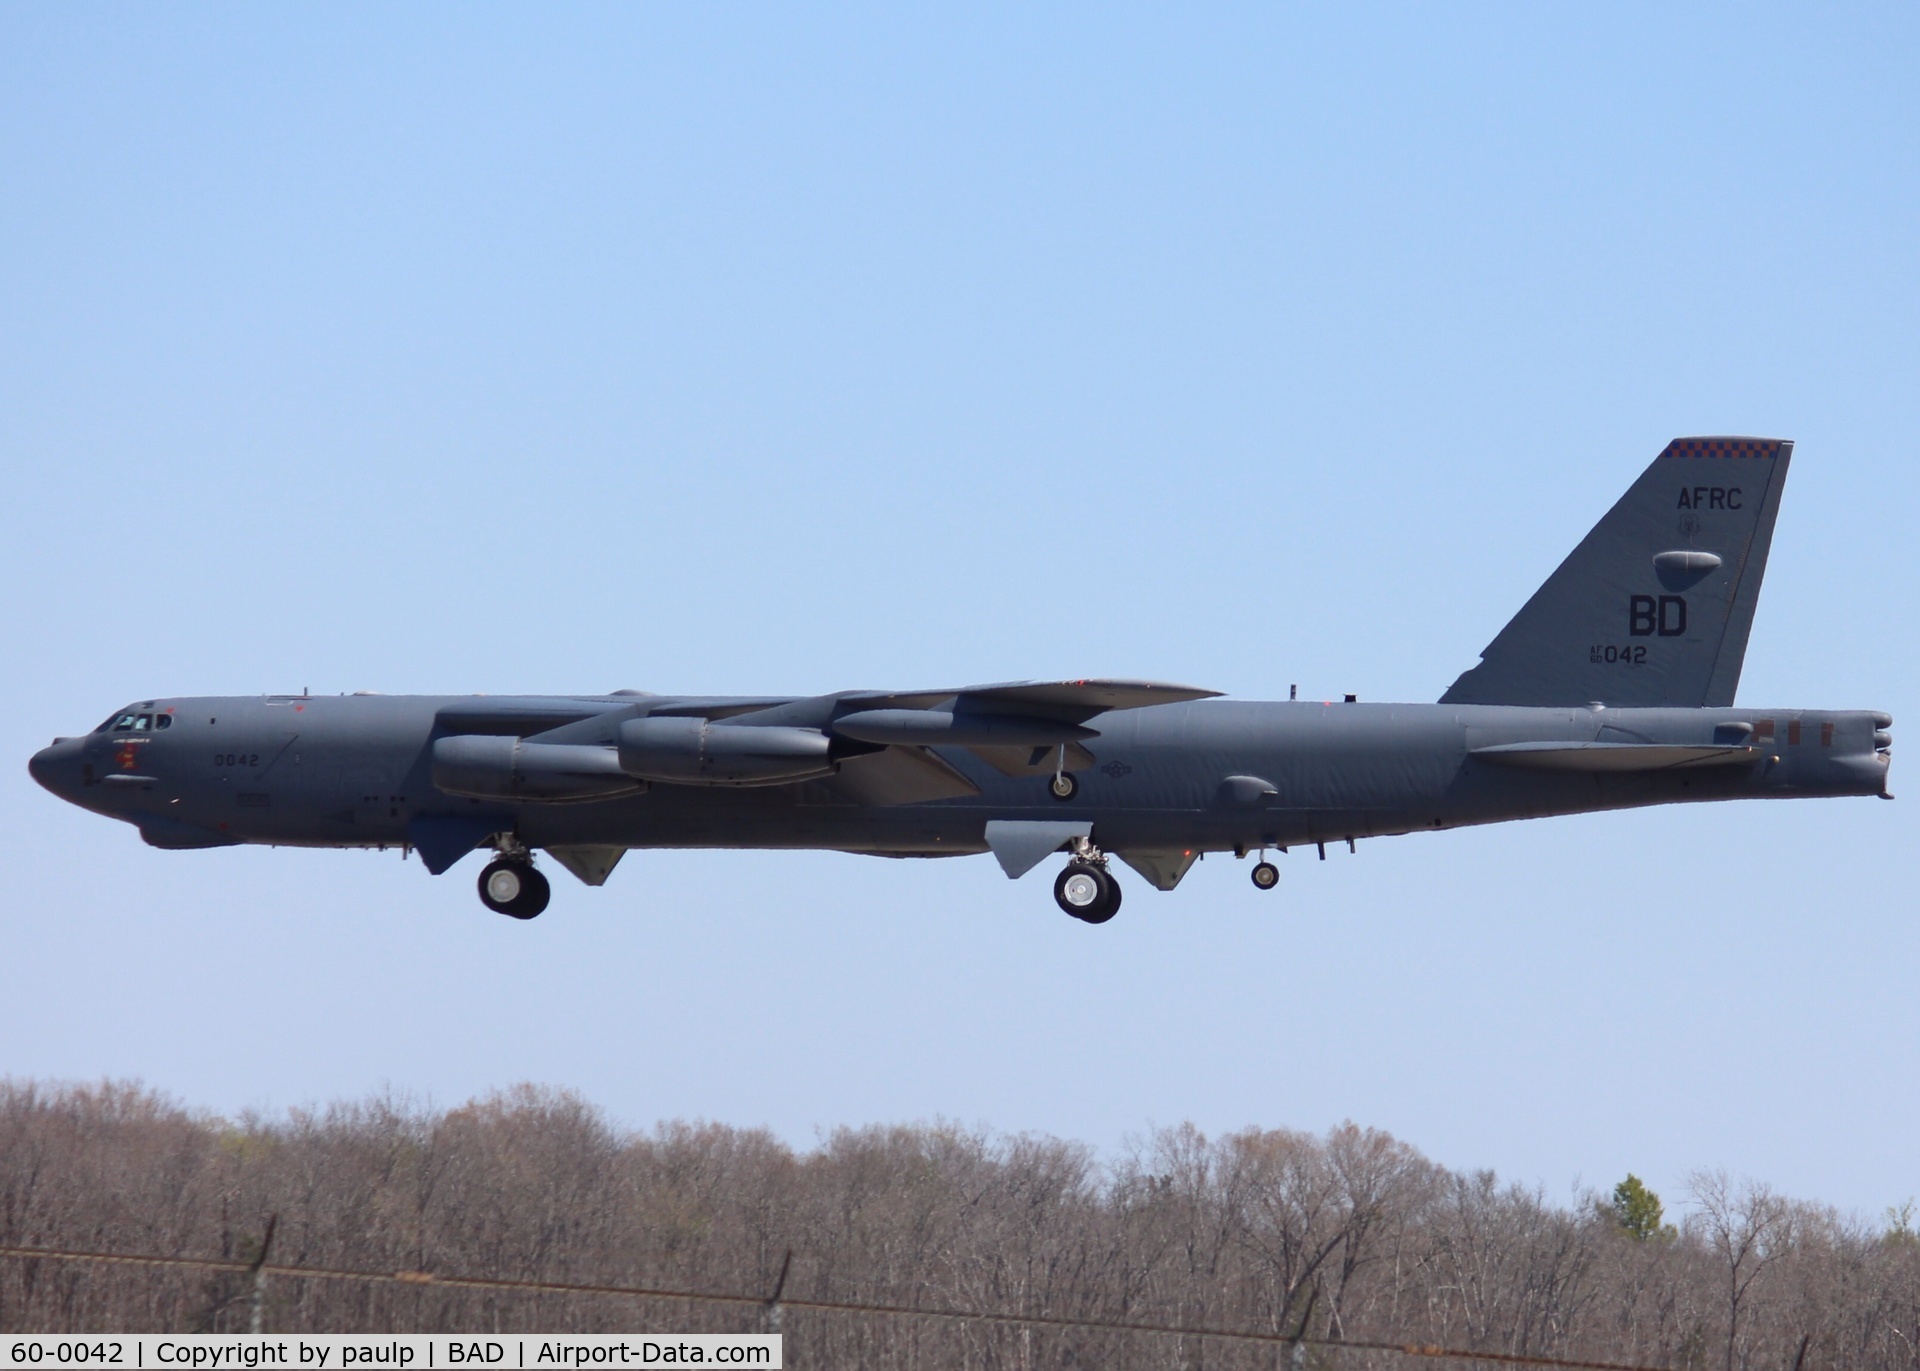 60-0042, 1960 Boeing B-52H Stratofortress C/N 464407, Landing at Barksdale Air Force Base.